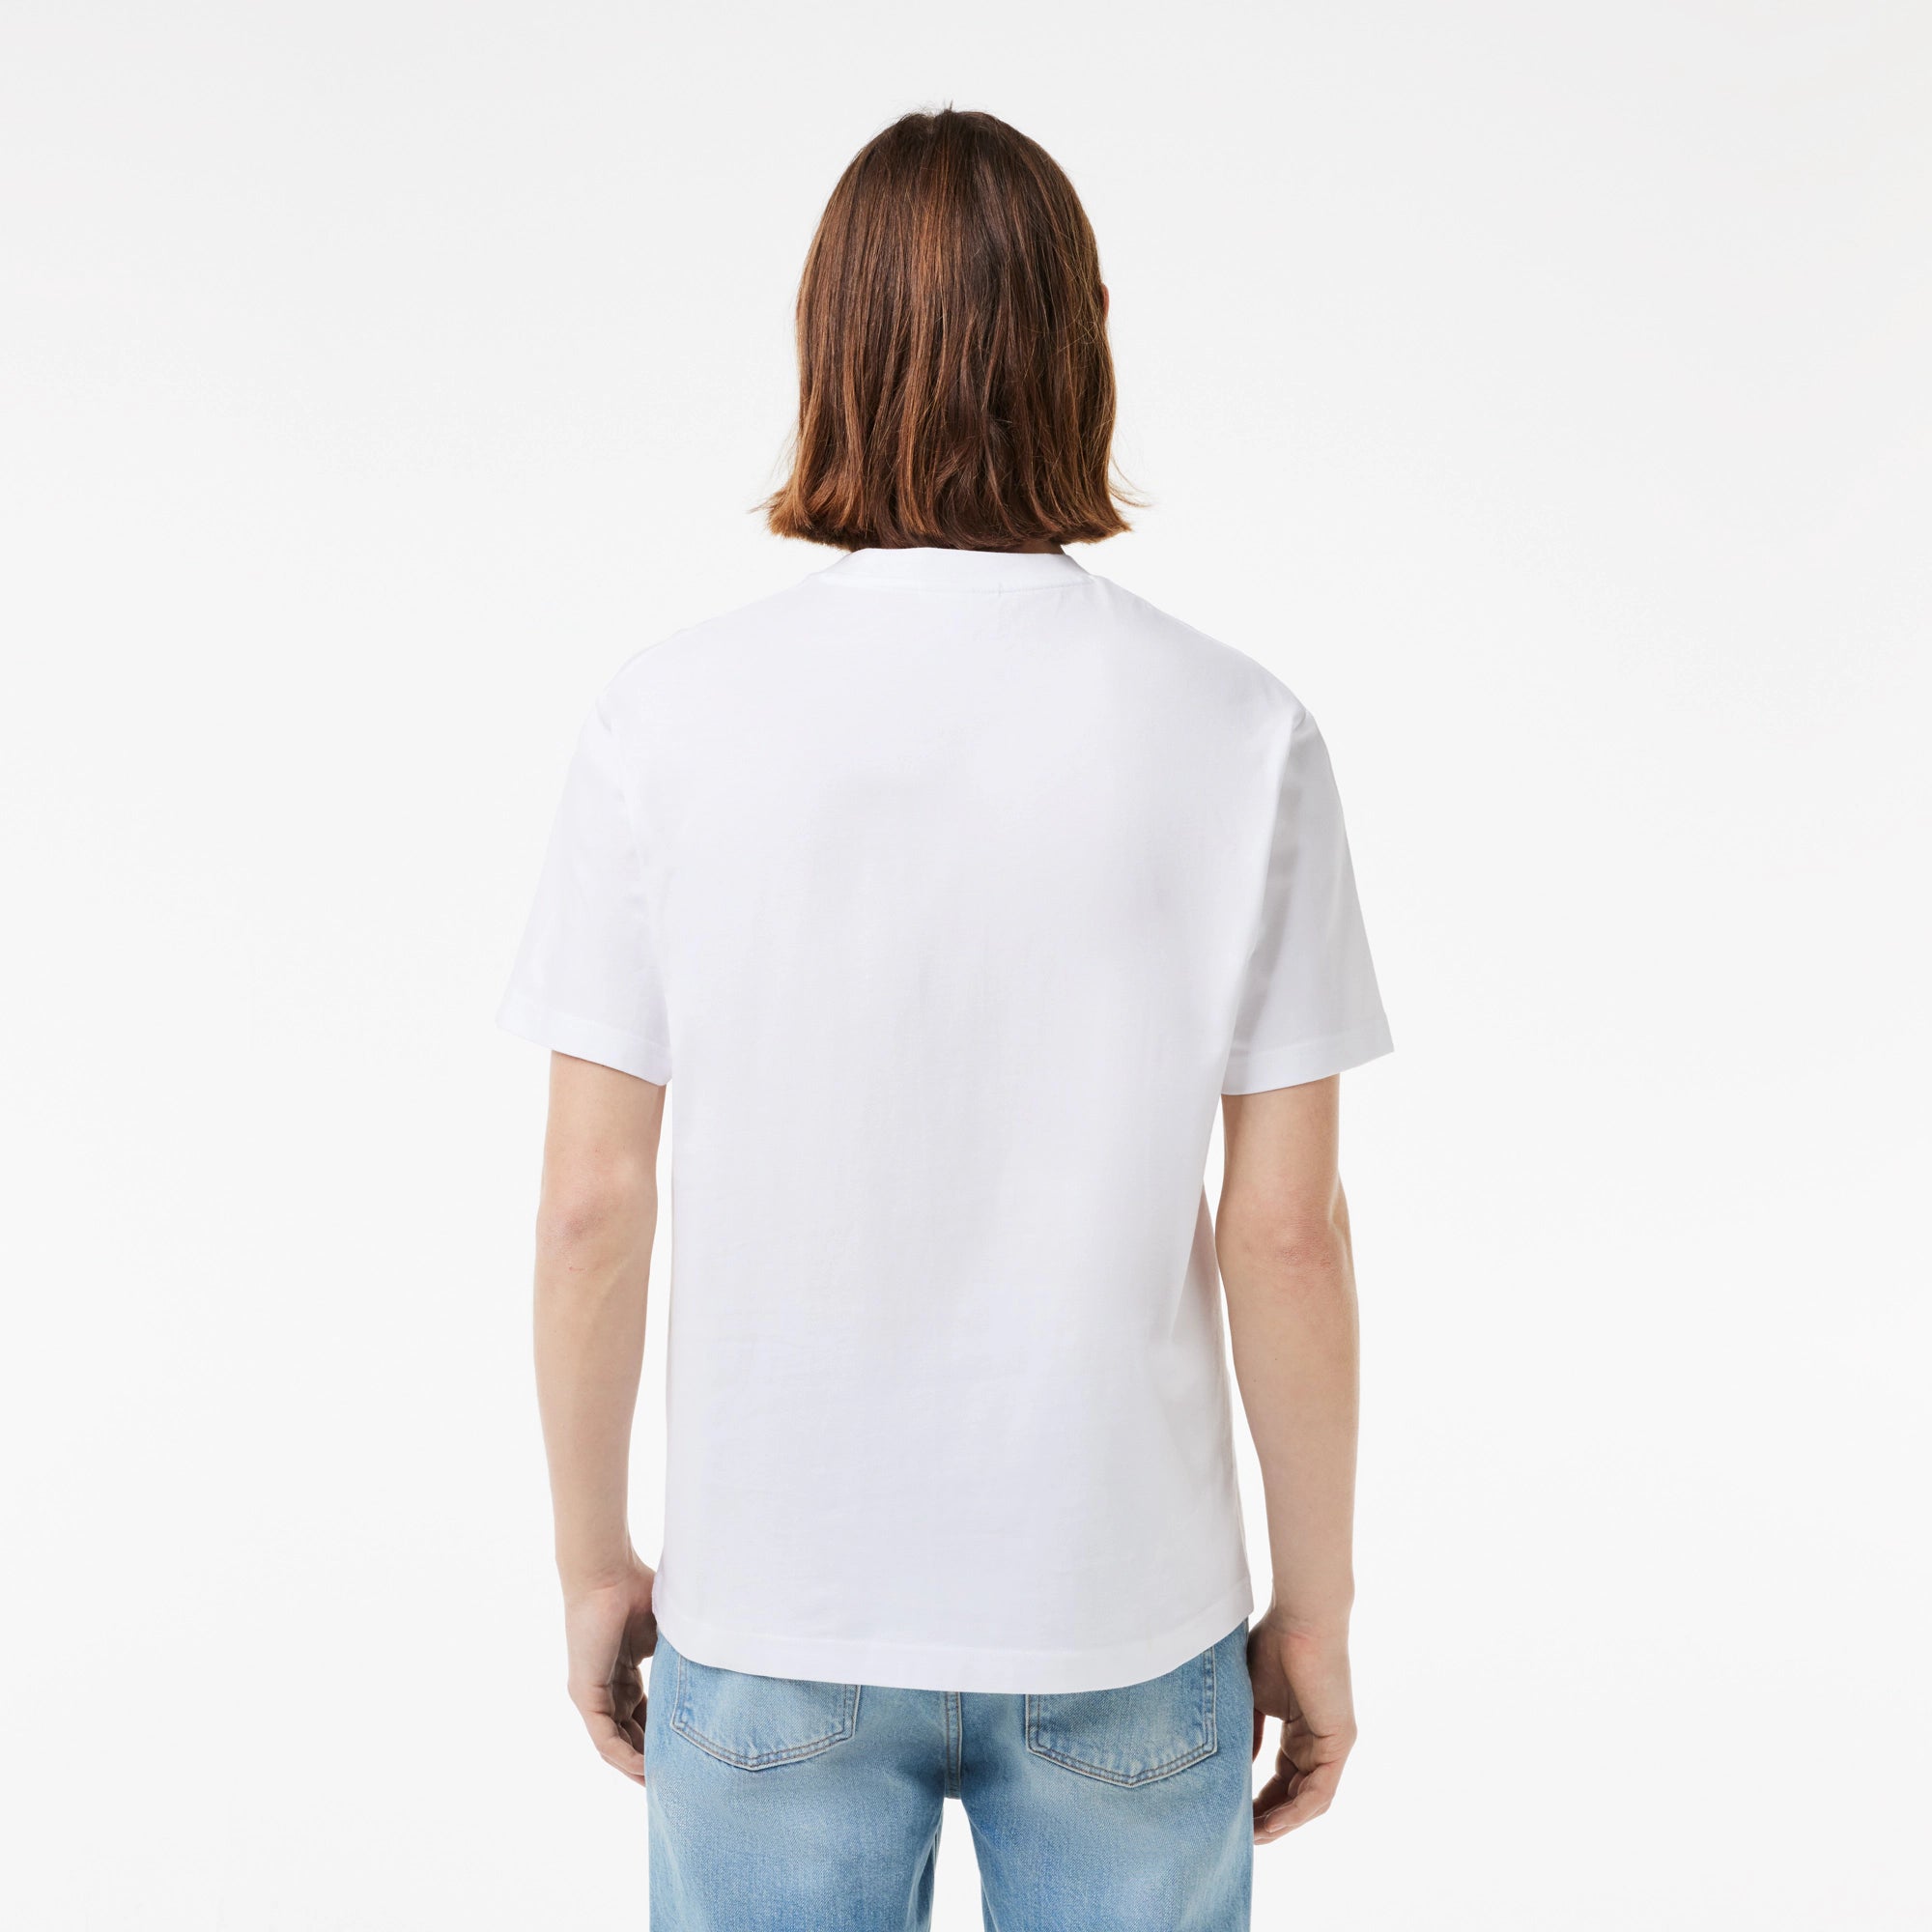 Lacoste Classic Fit T-Shirt aus weißem Baumwolljersey 